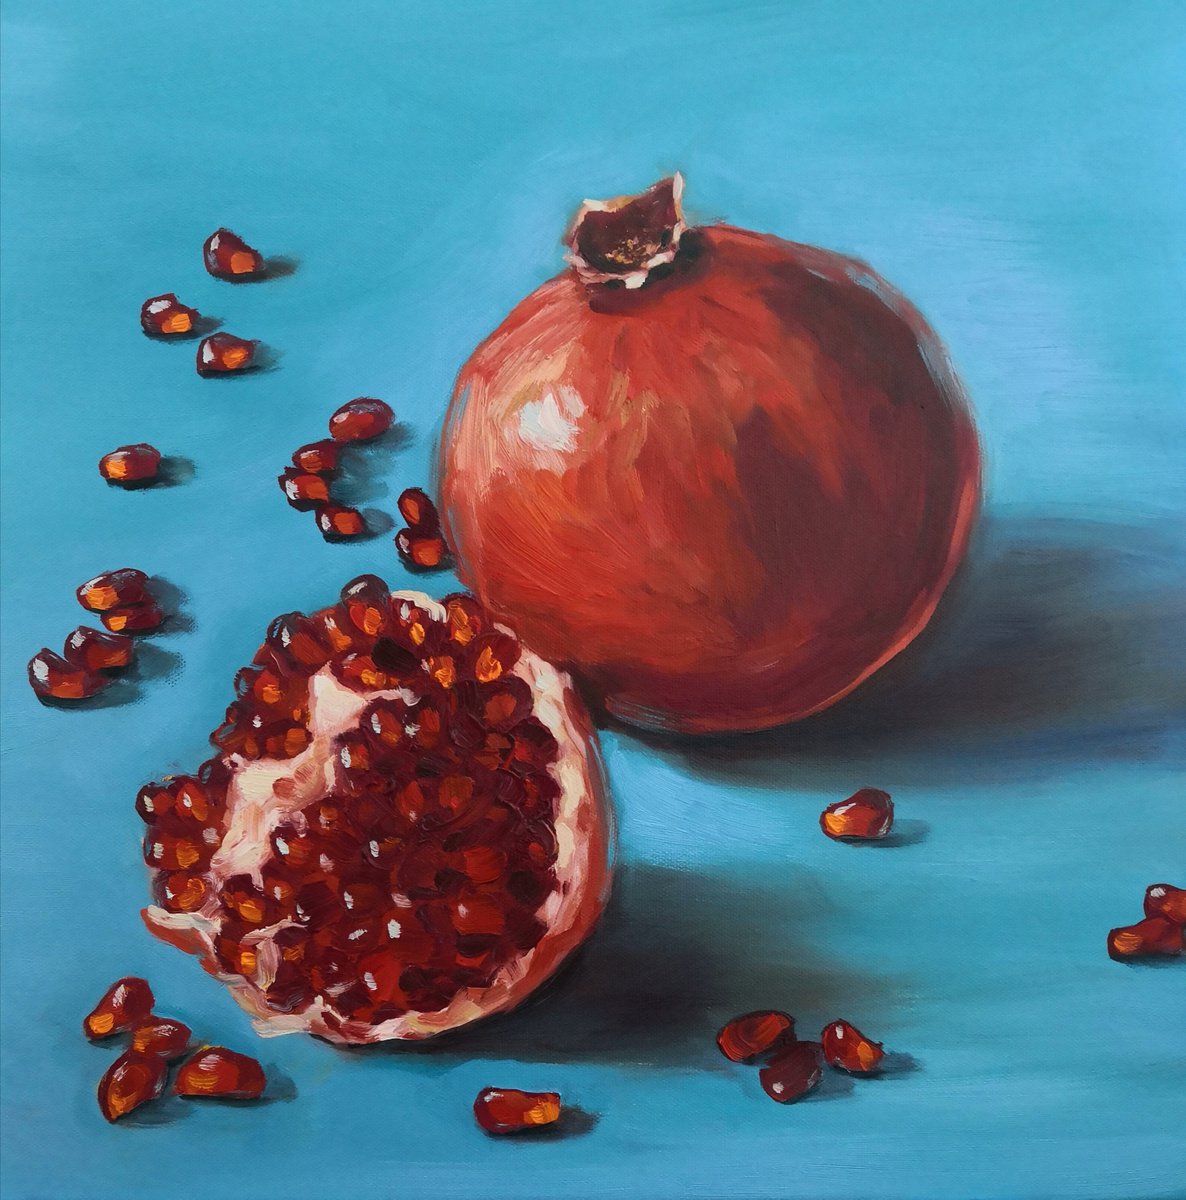 Ripe red pomegranates on turquoise - blue background still life 2 by Jane Lantsman